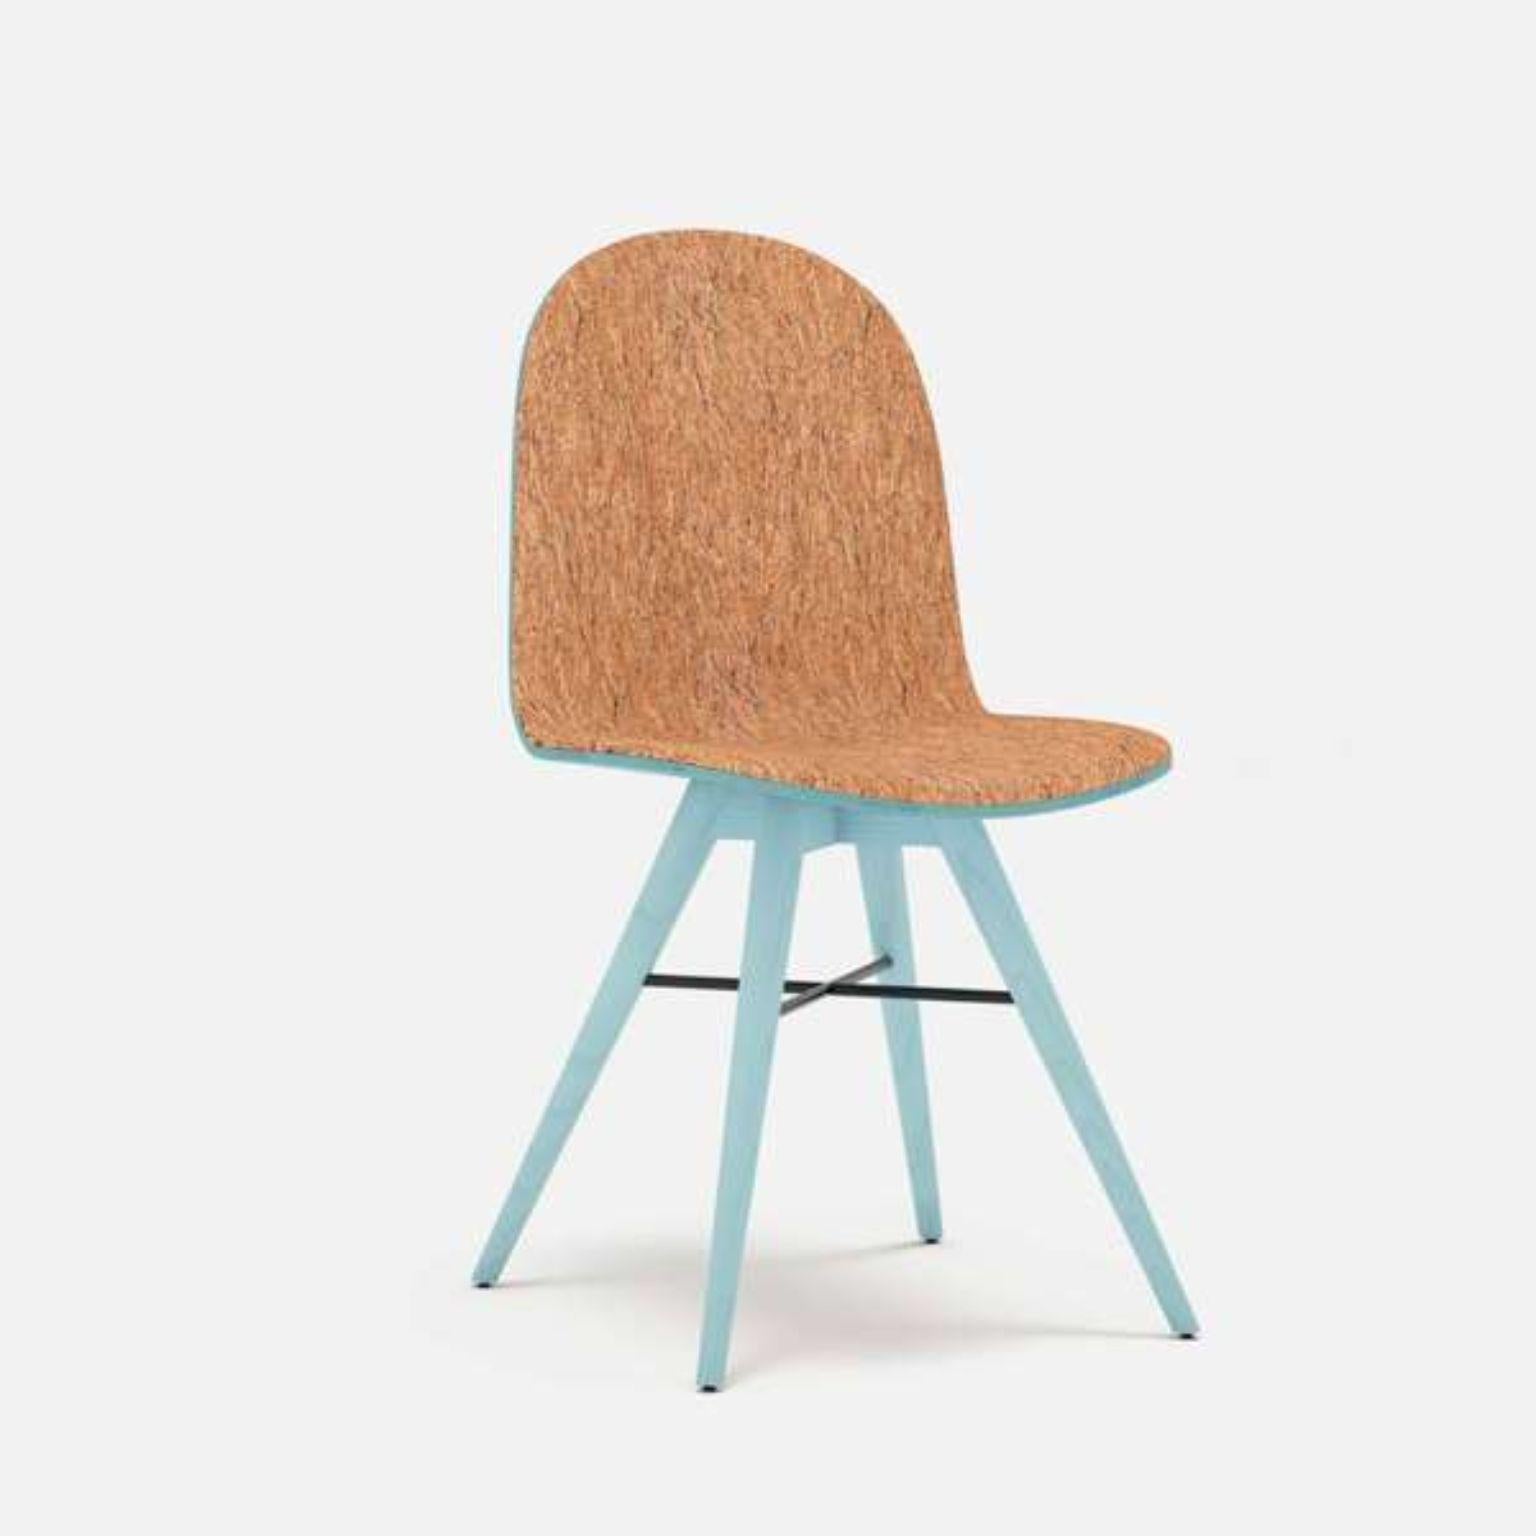 Portuguese Walnut and Corkfabric Contemporary Chair by Alexandre Caldas